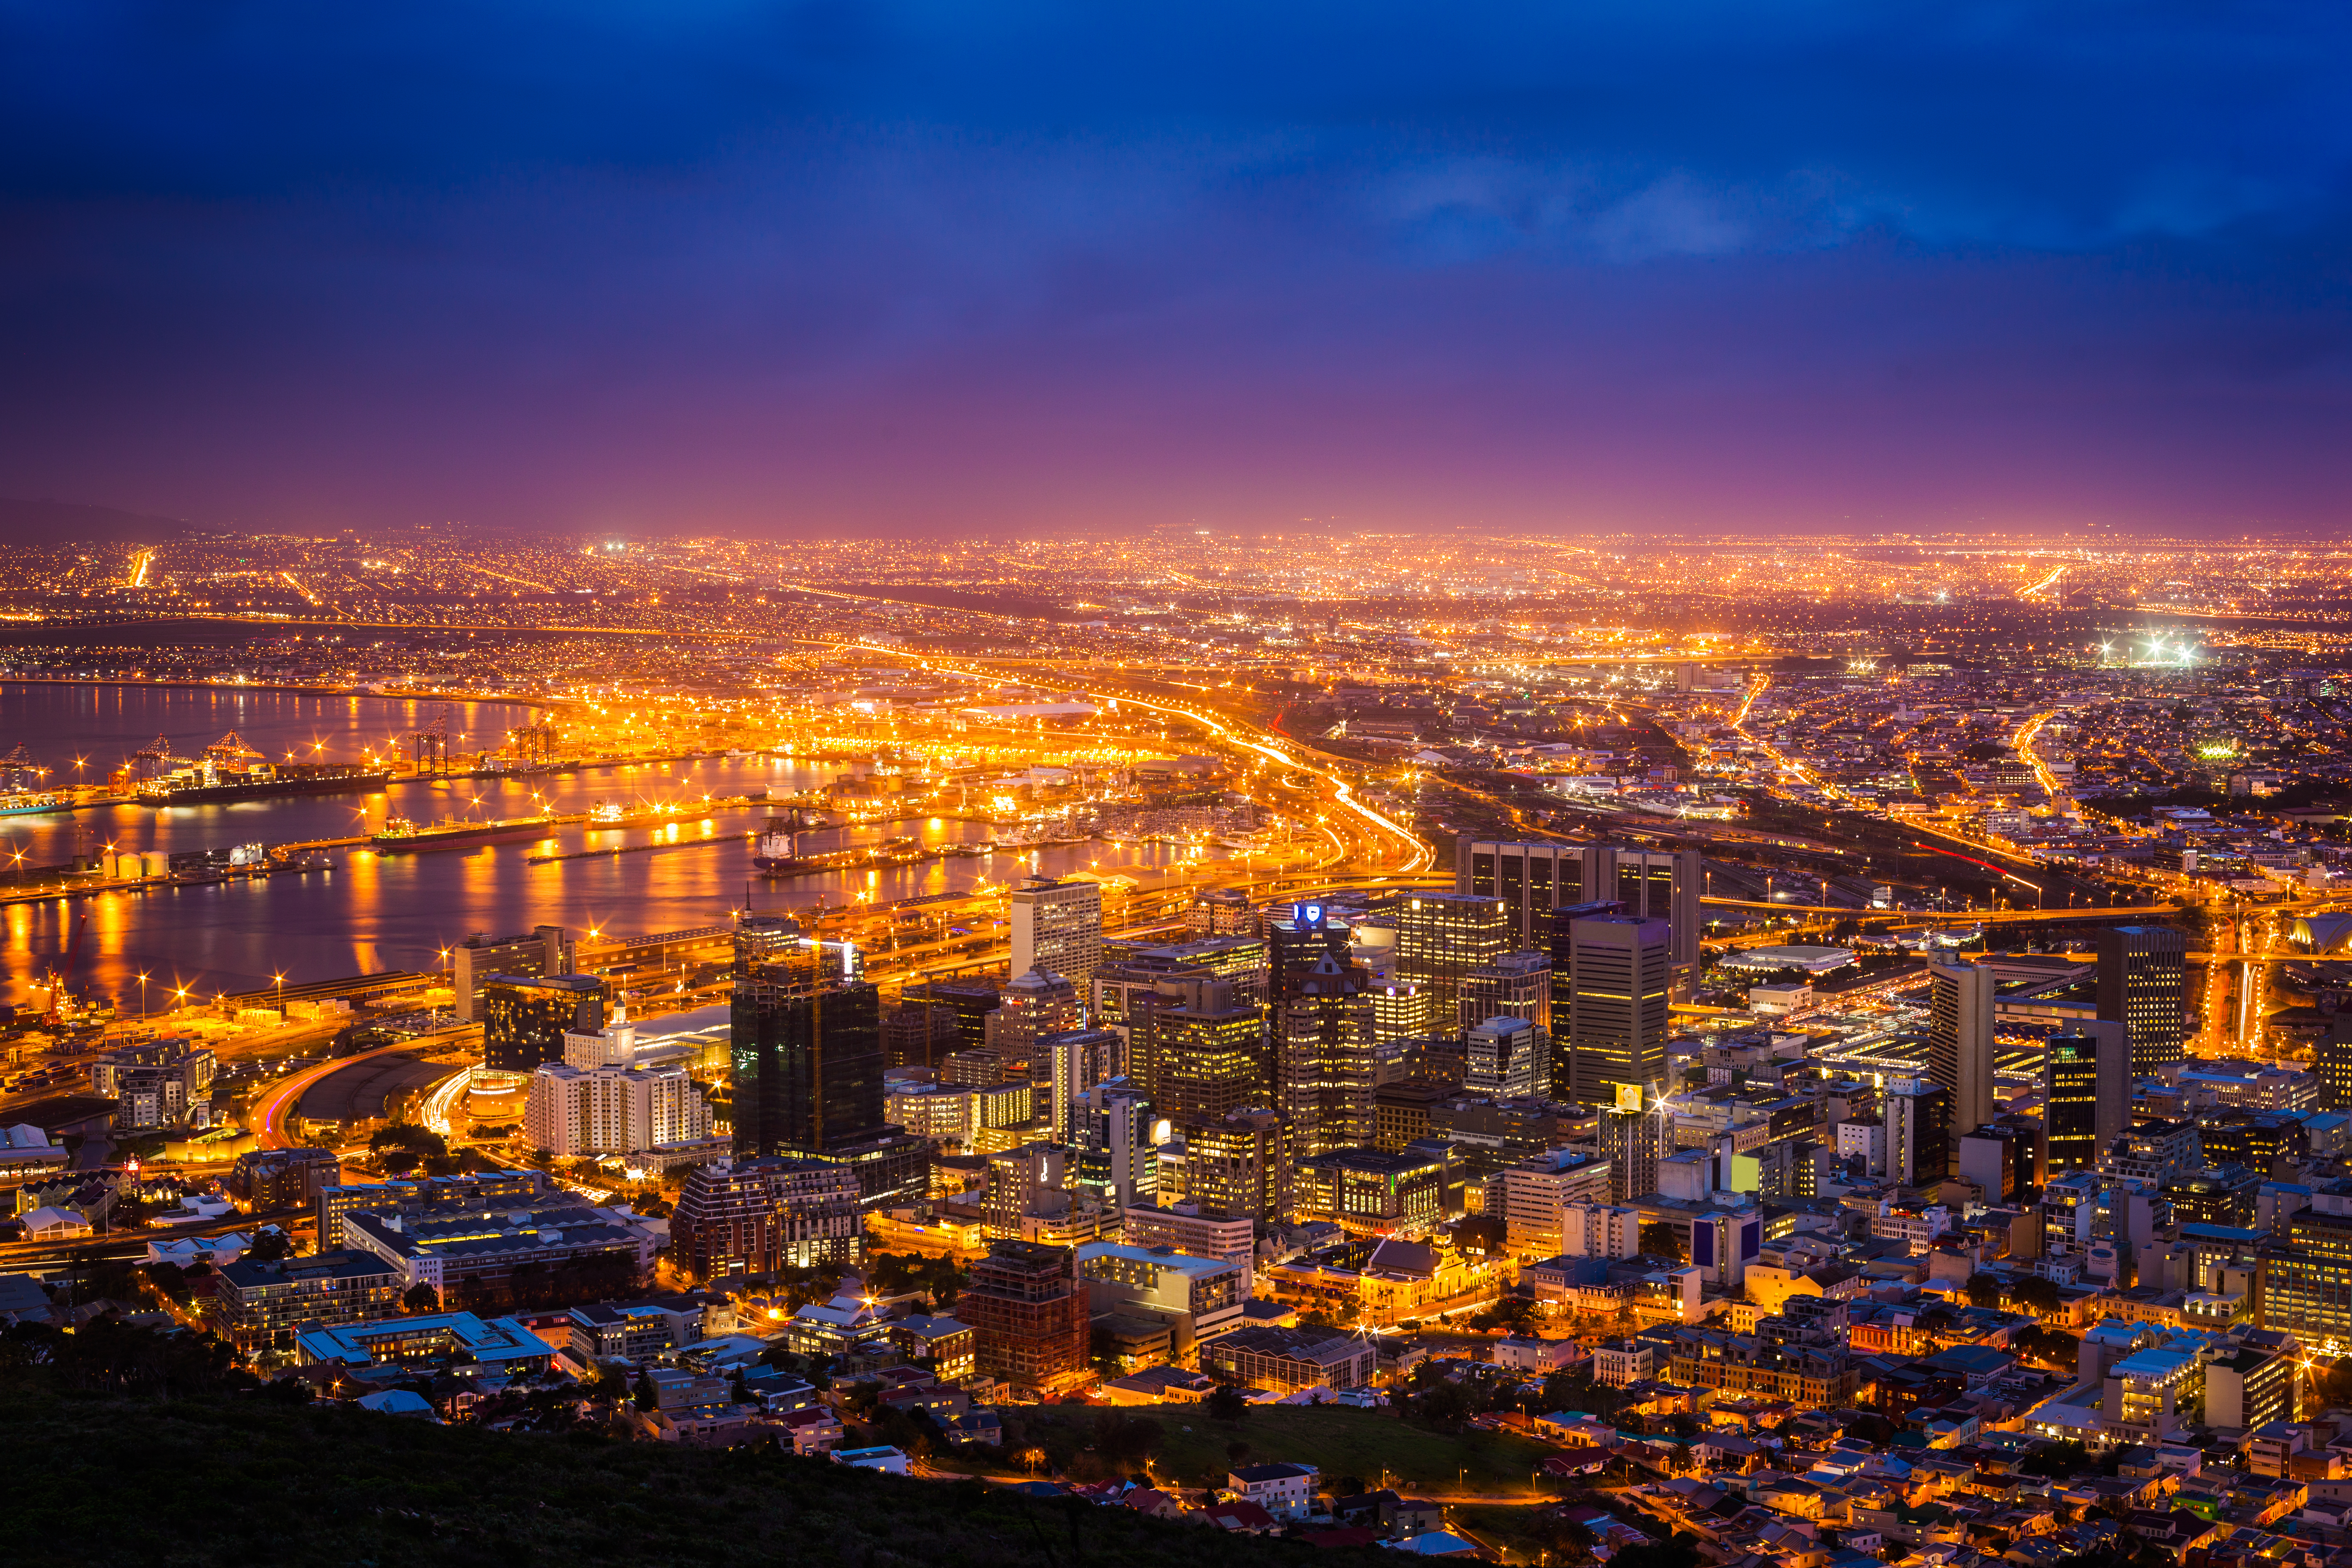 View of Cape Town at dawn, South Africa, Shutterstock, Maurizio De Mattei